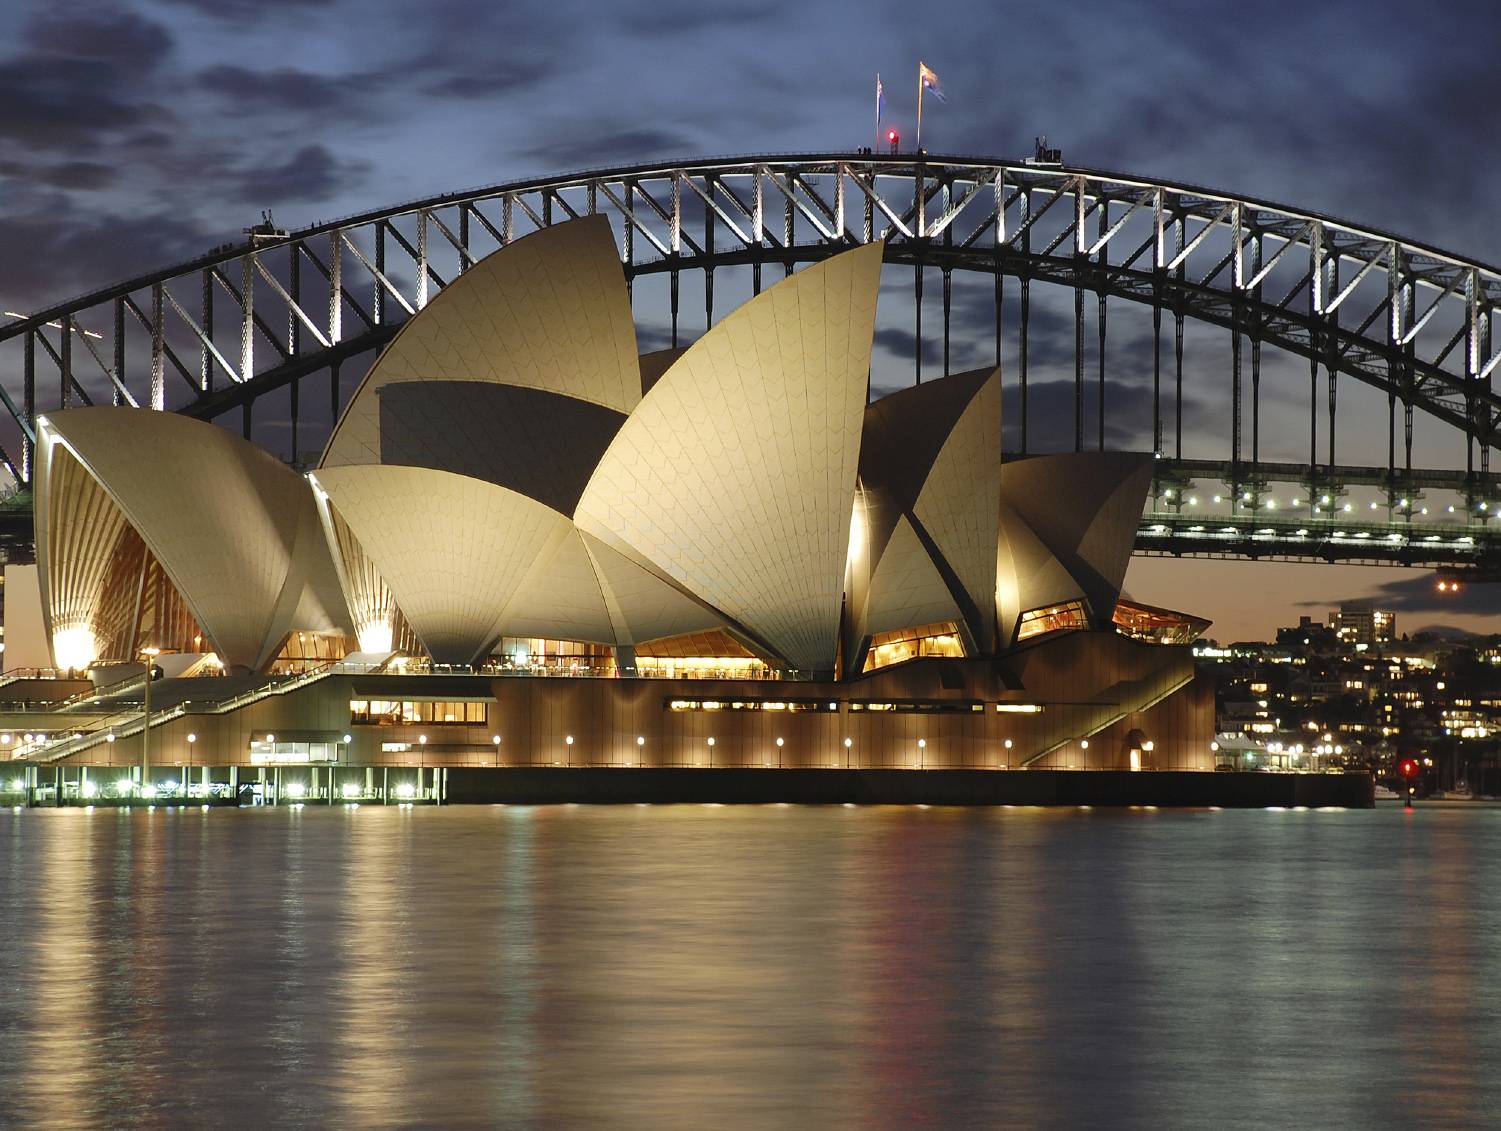 Night Sydney Opera House with Harbour Bridge